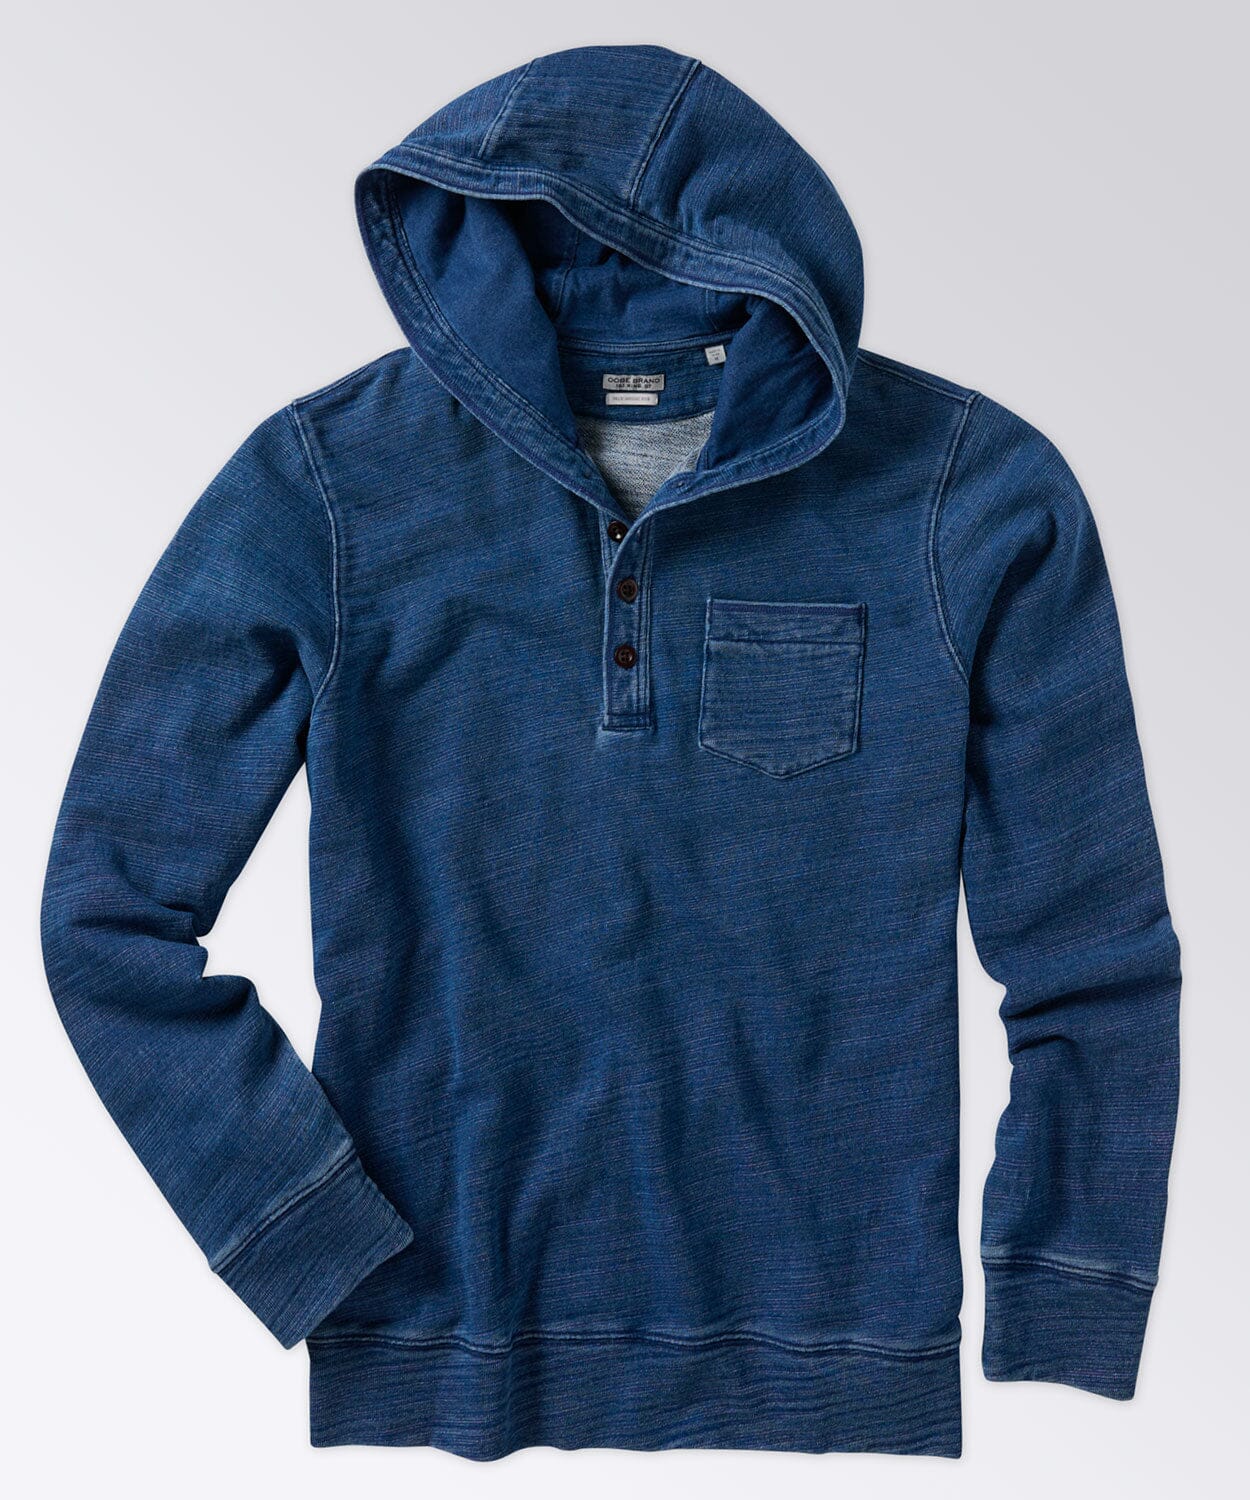 Collection | Menswear Premium OOBE by Indigo Blue BRAND